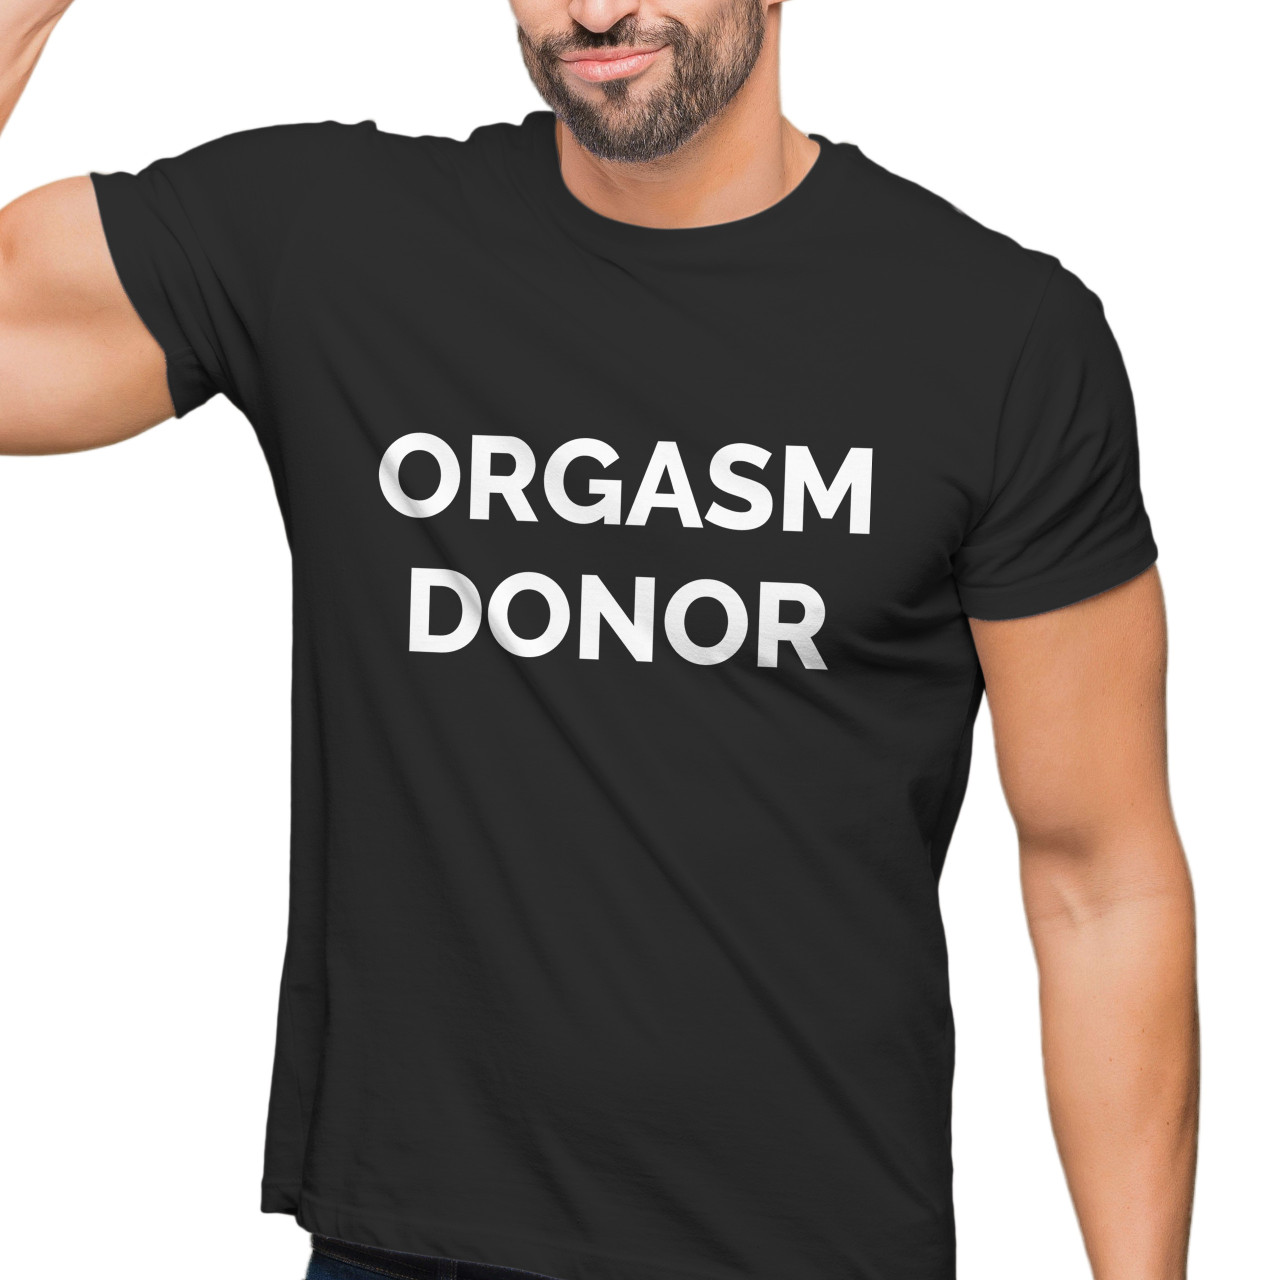 Pánské tričko s potiskem “Orgasm donor”